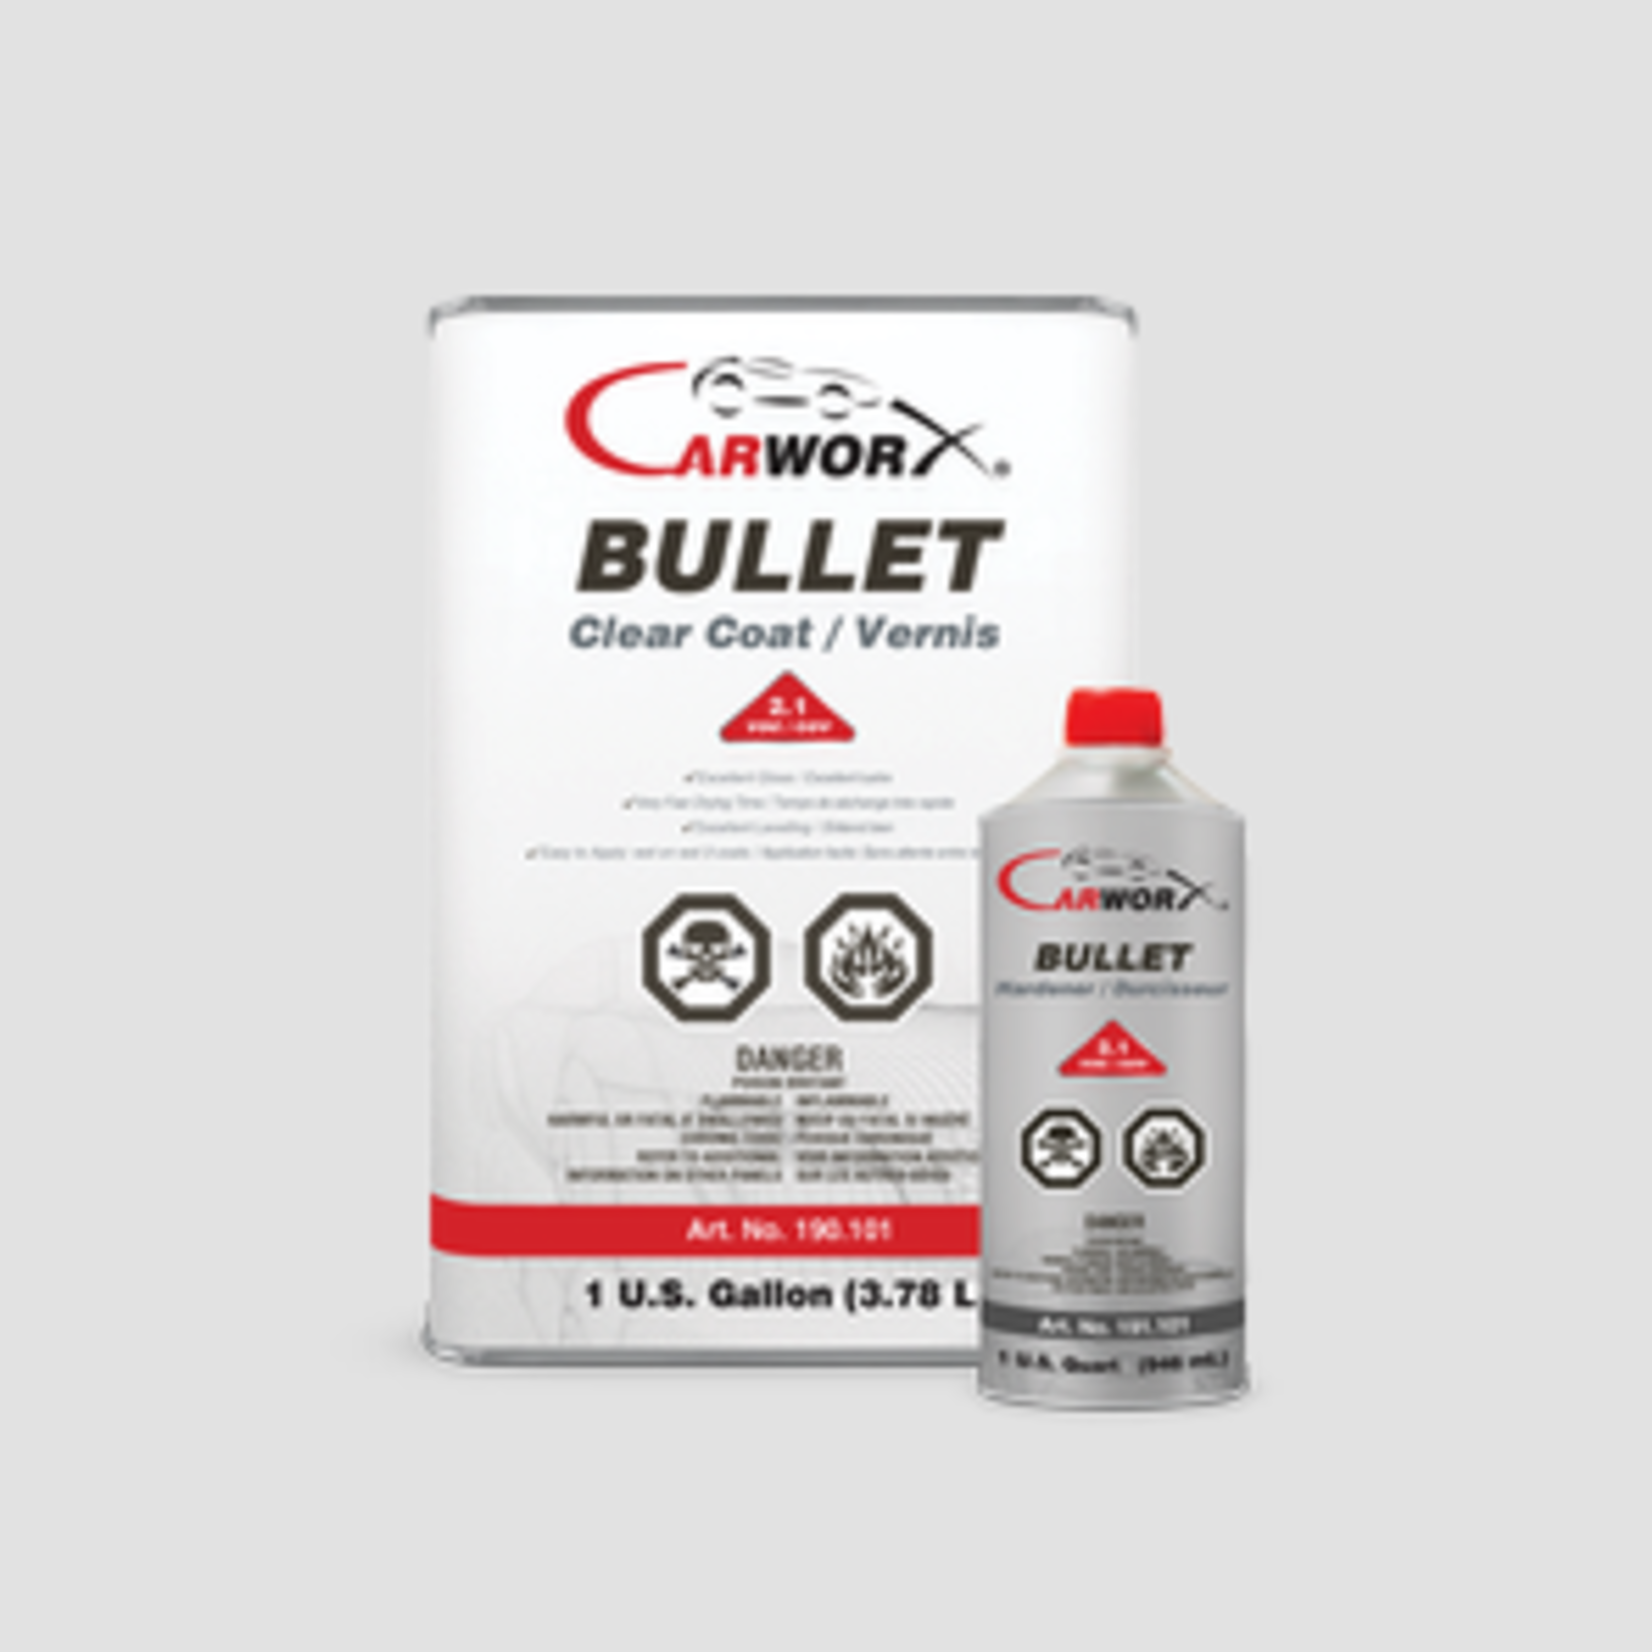 CARWORX Carworx Bullet Hardener 1 QT  191.101